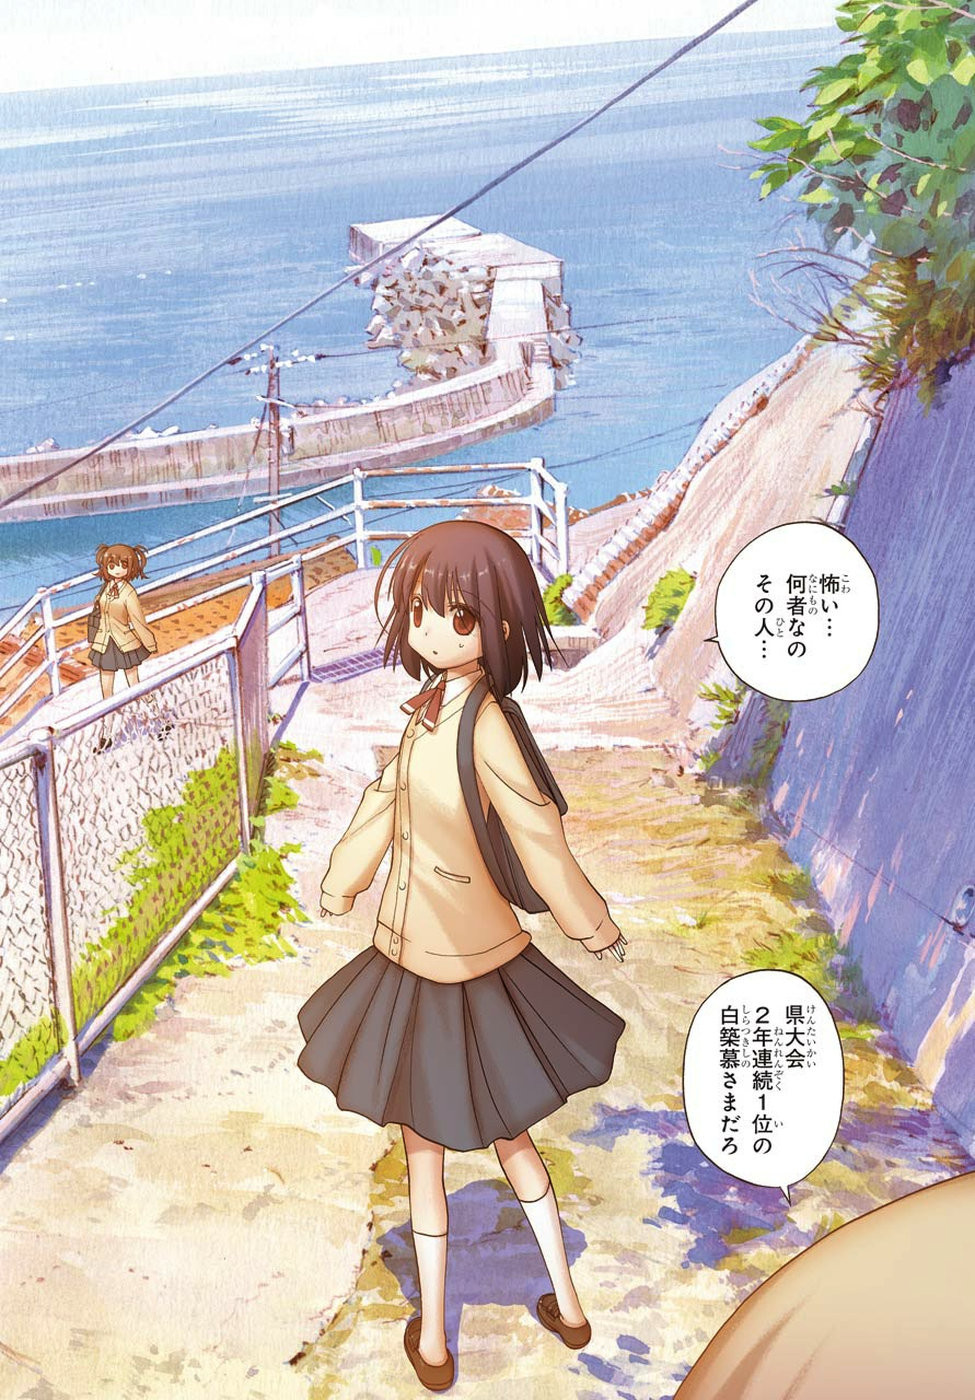 Shinohayu - The Dawn of Age Manga - Chapter 073 - Page 2